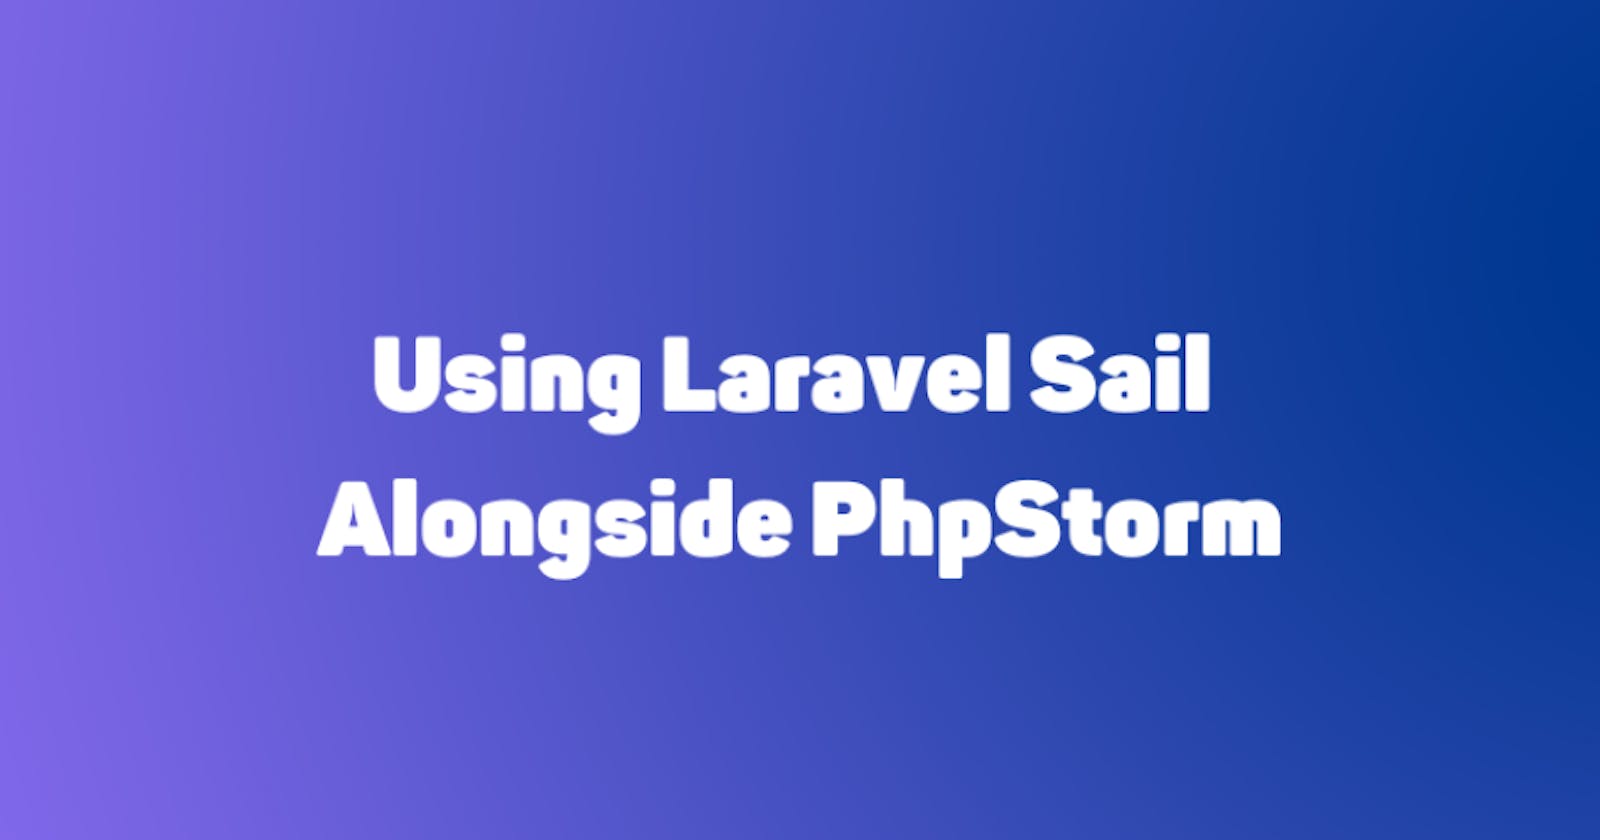 Using Laravel Sail alongside PhpStorm